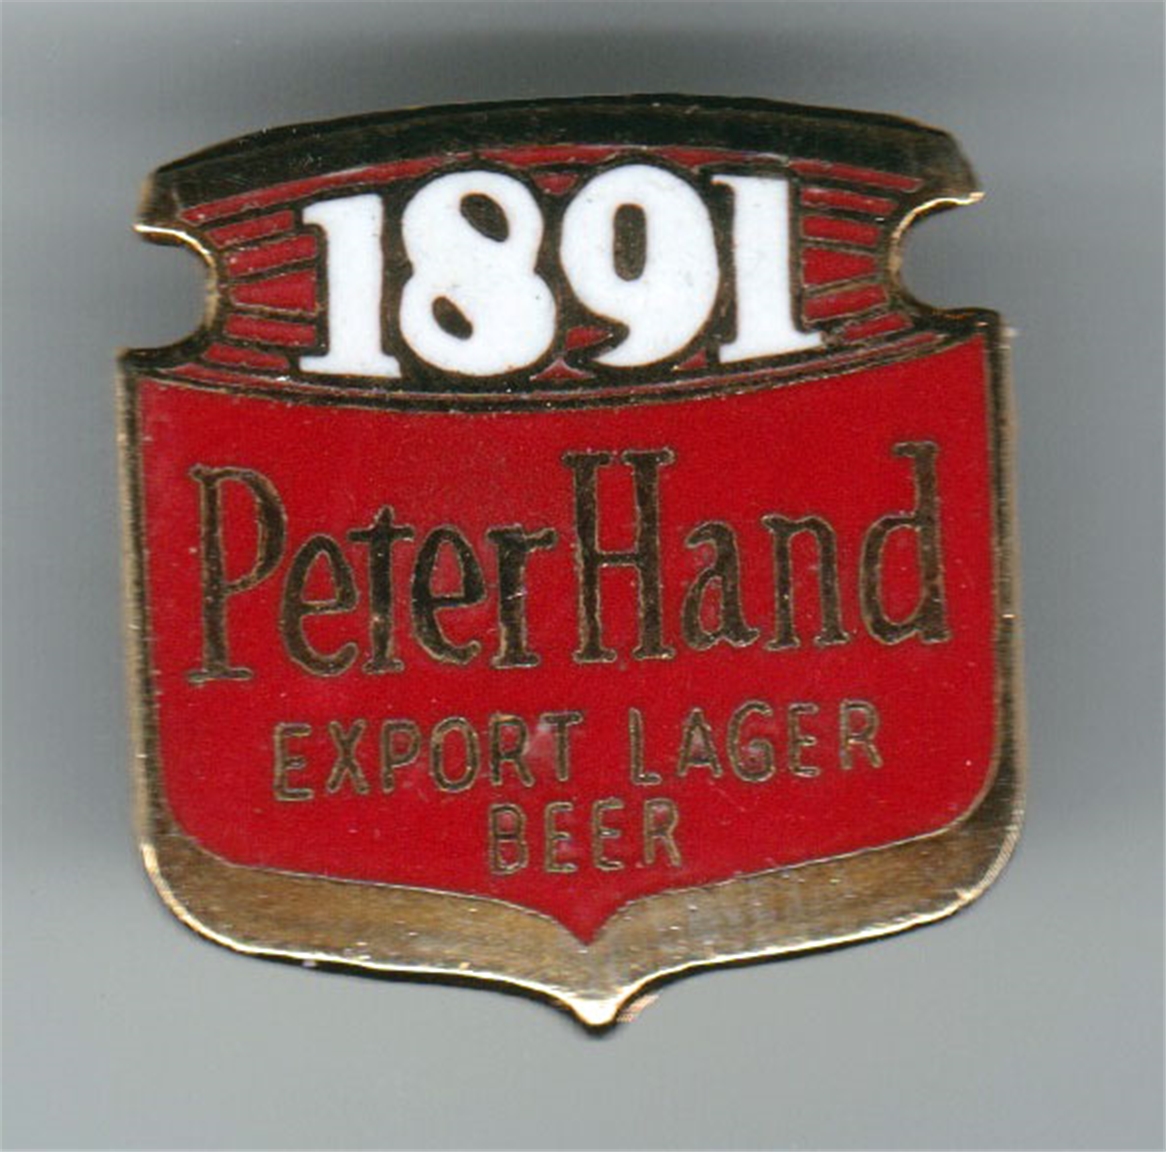 Peter Hand Export Lager Beer Pin